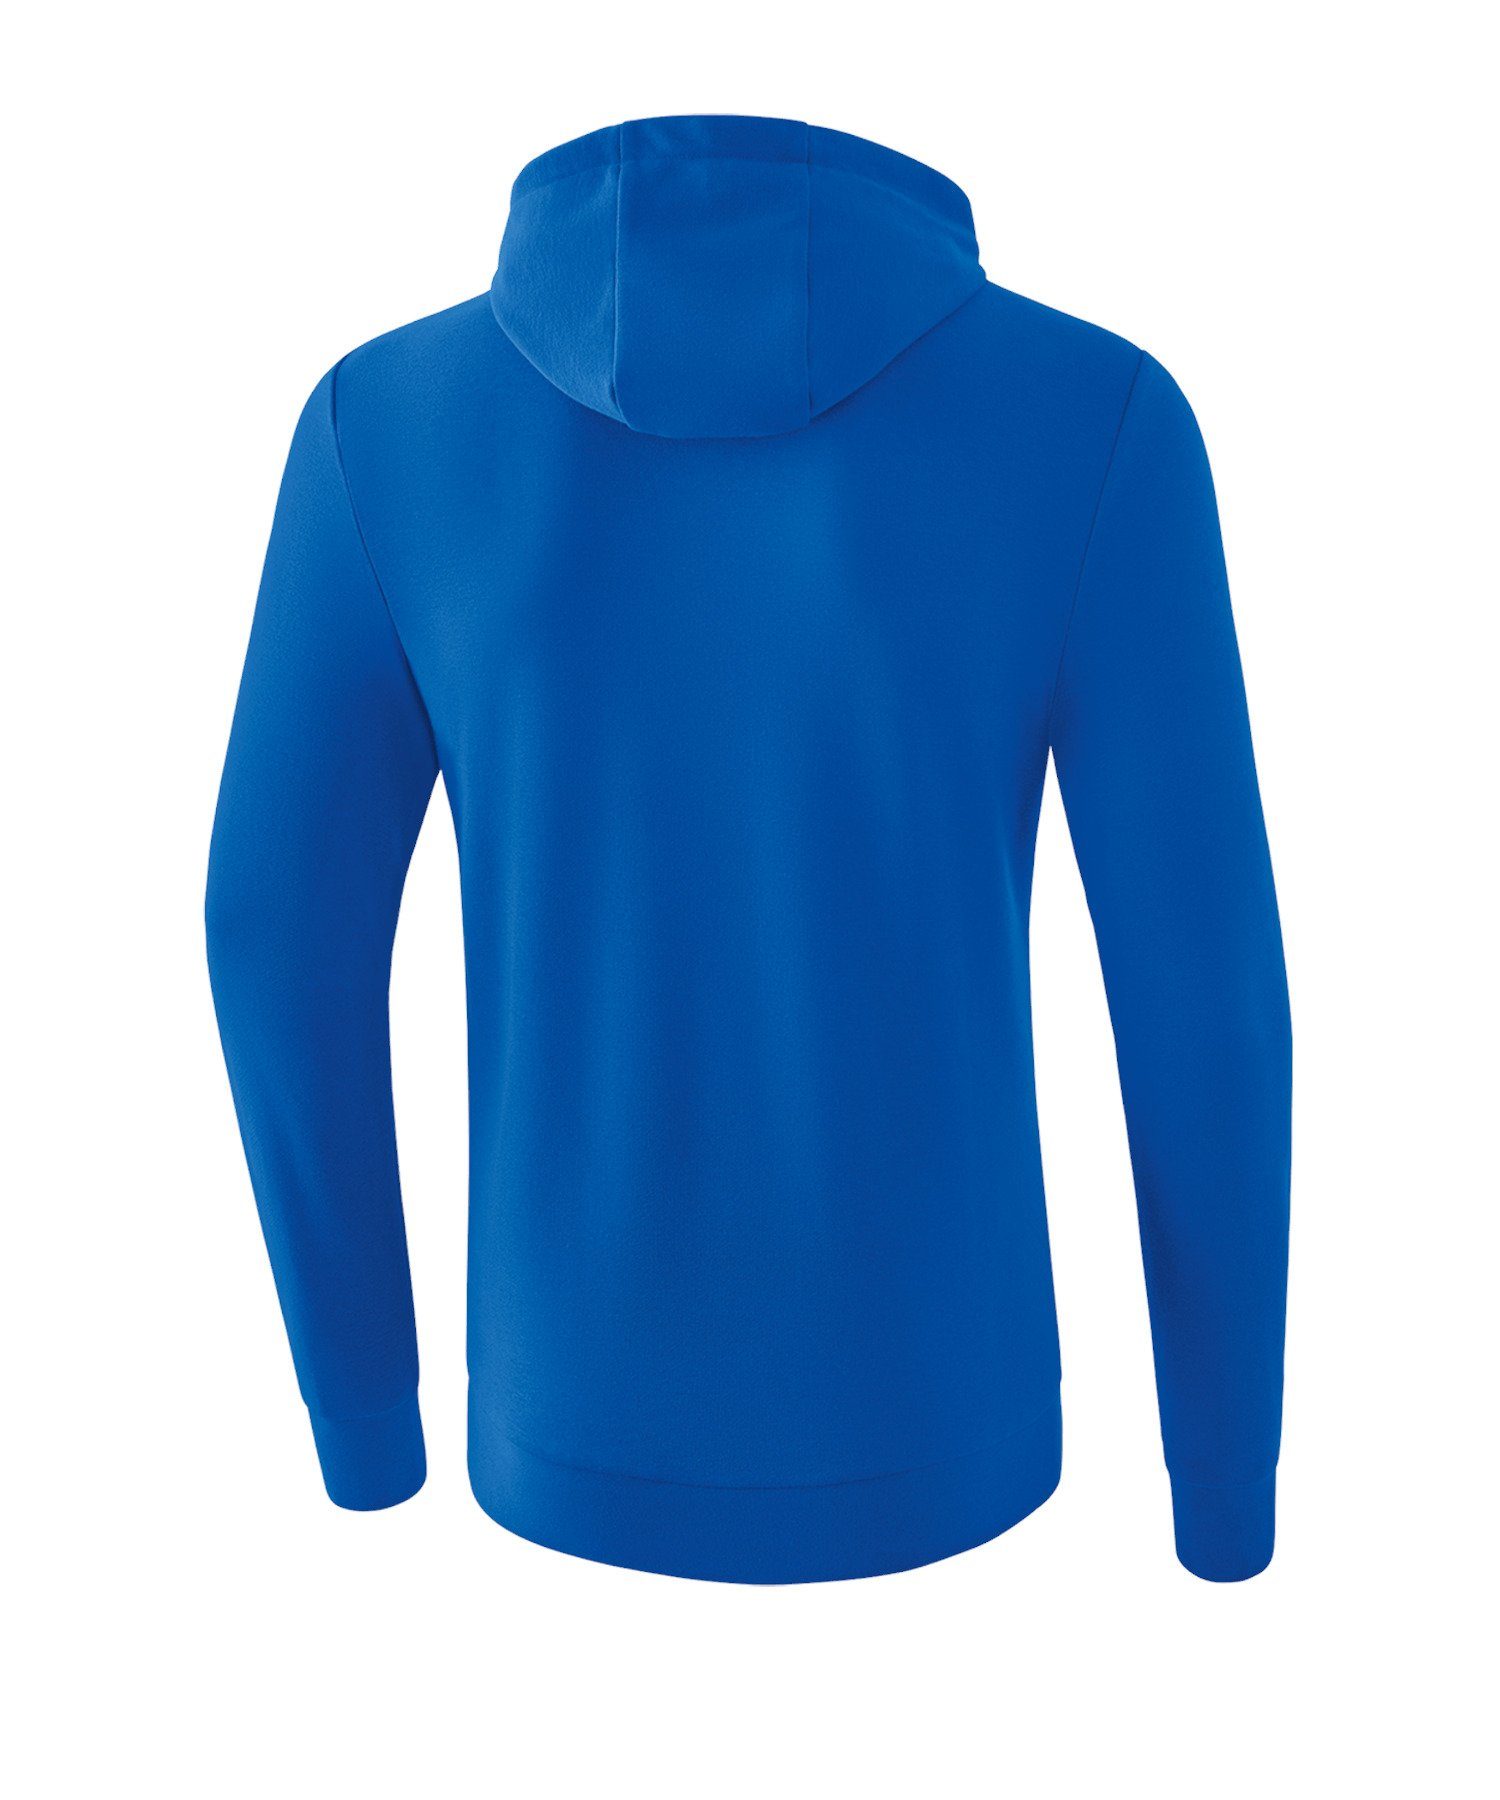 Erima blaublau Basic Sweatshirt Hoody